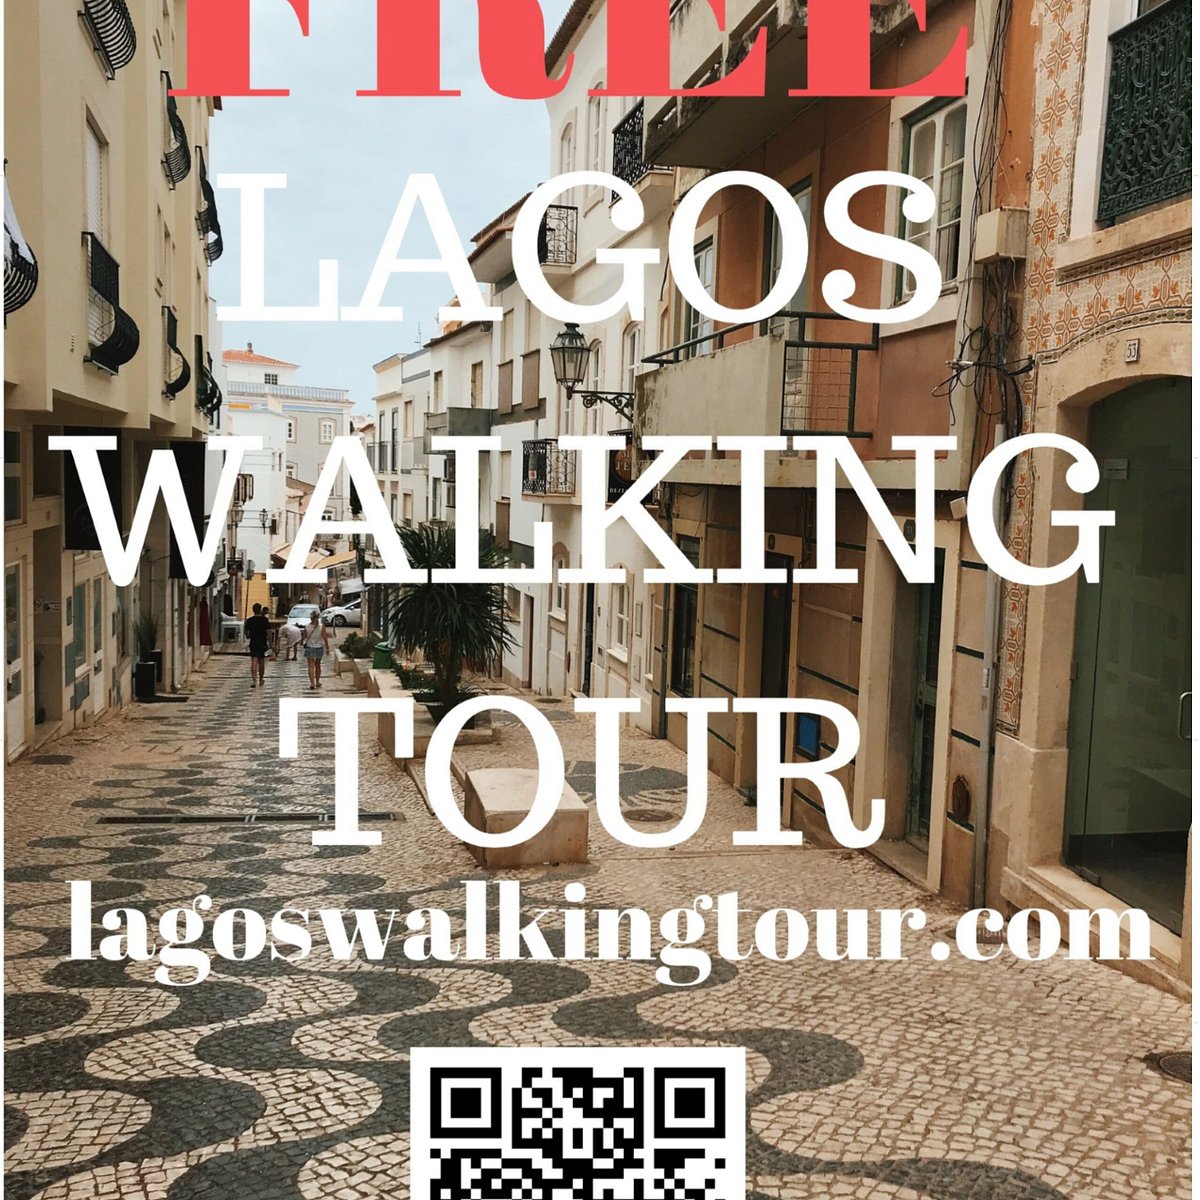 free walking tours lagos portugal